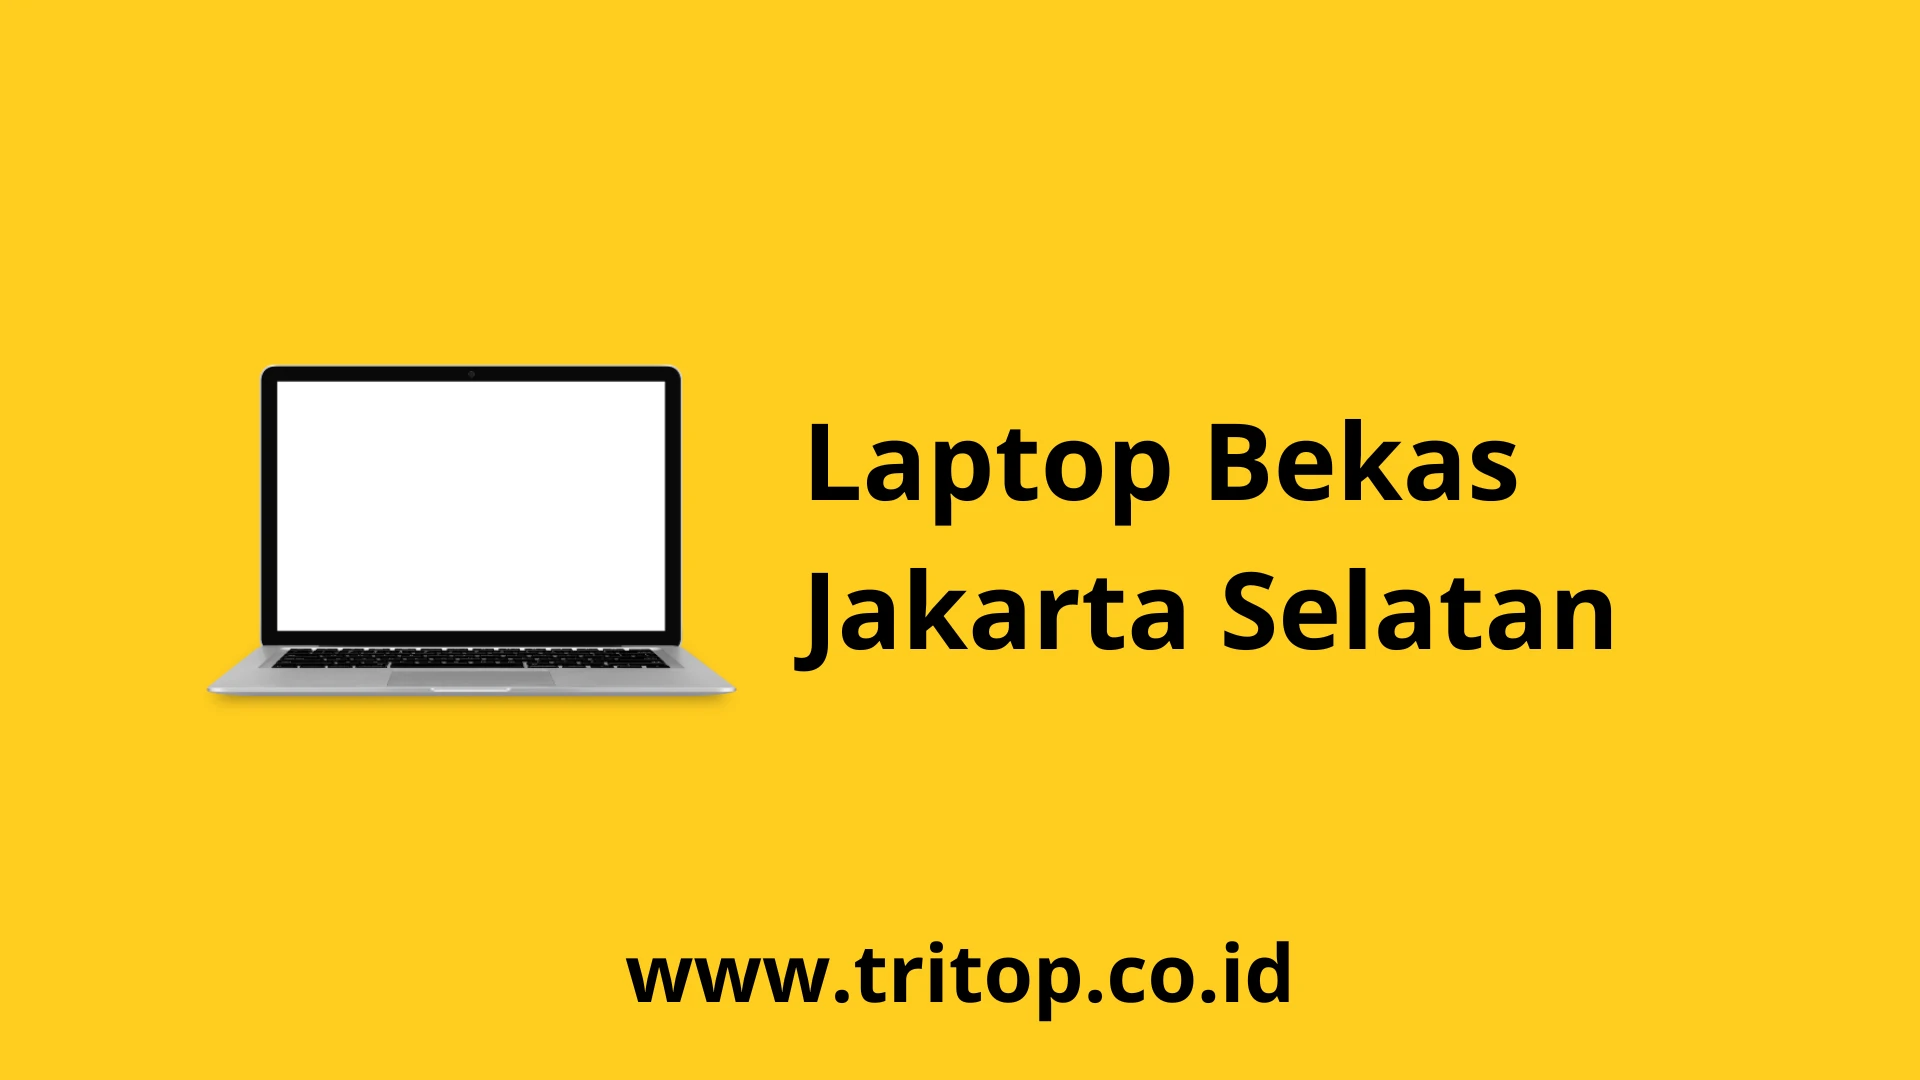 Laptop Bekas Jakarta Selatan